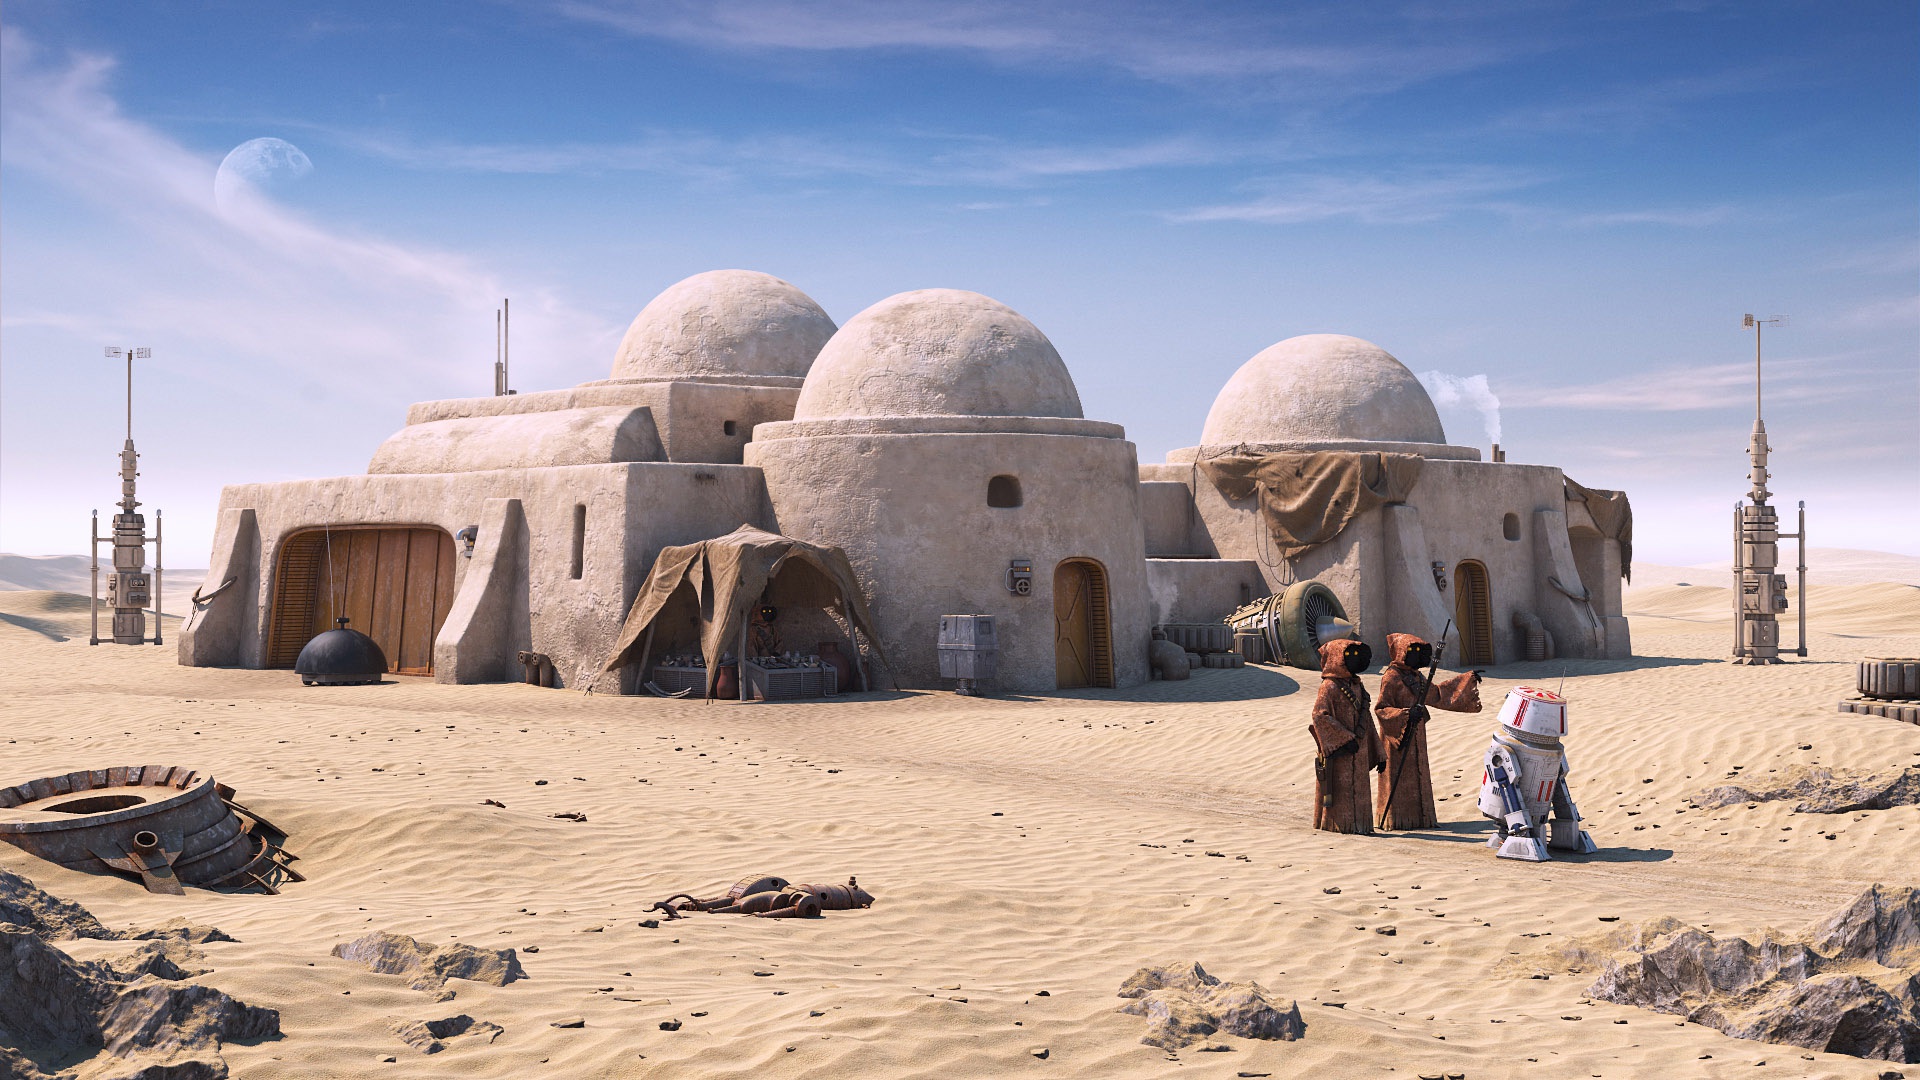 Building Desert Jawas Star Wars Robot Star Wars Tatooine Star Wars 1920x1080